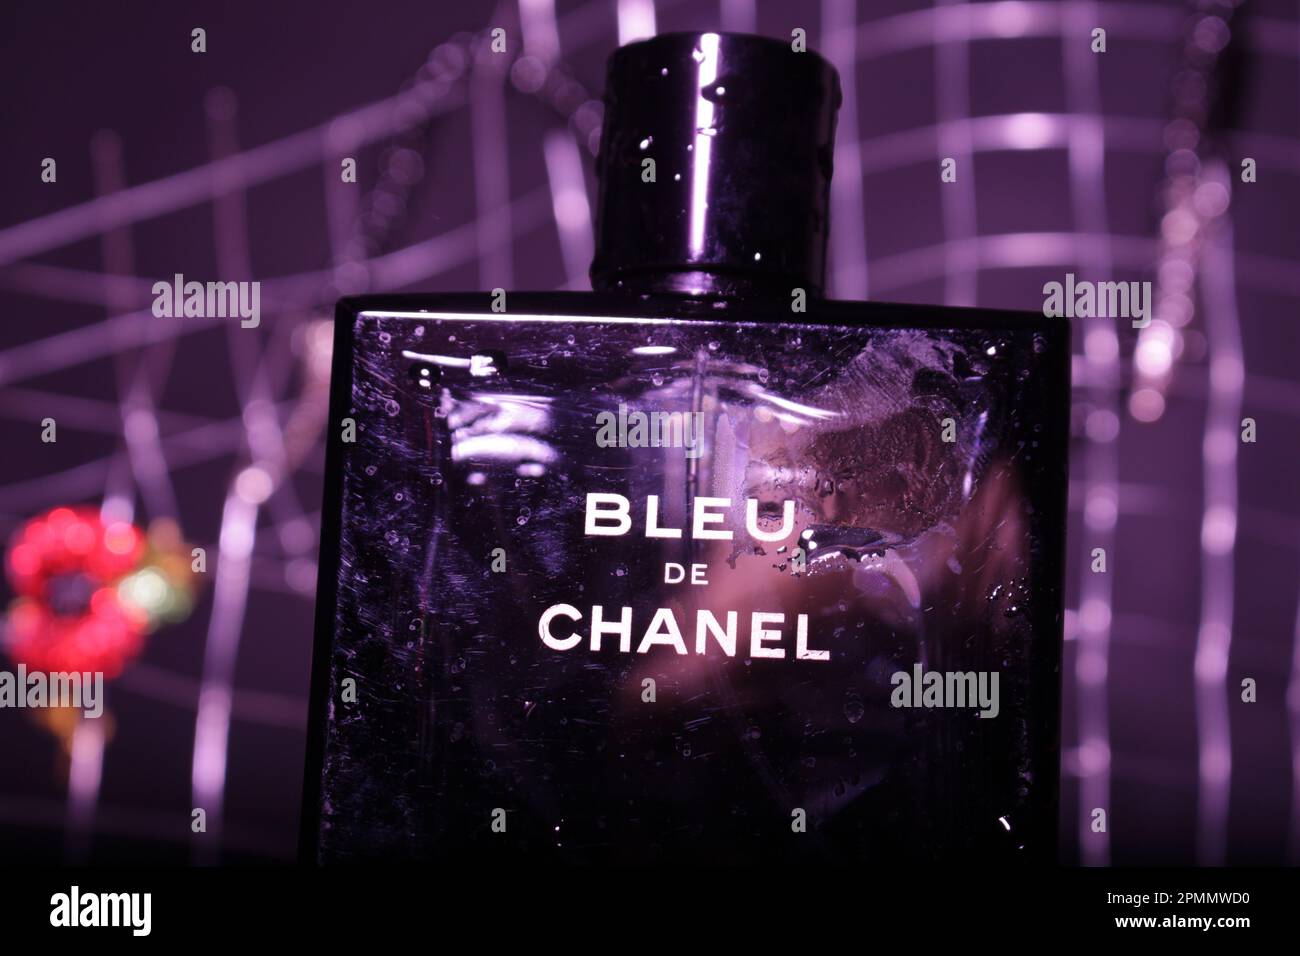 1940 Chanel Le 1940 Bleu De Chanel Perfume Bottle, Glas